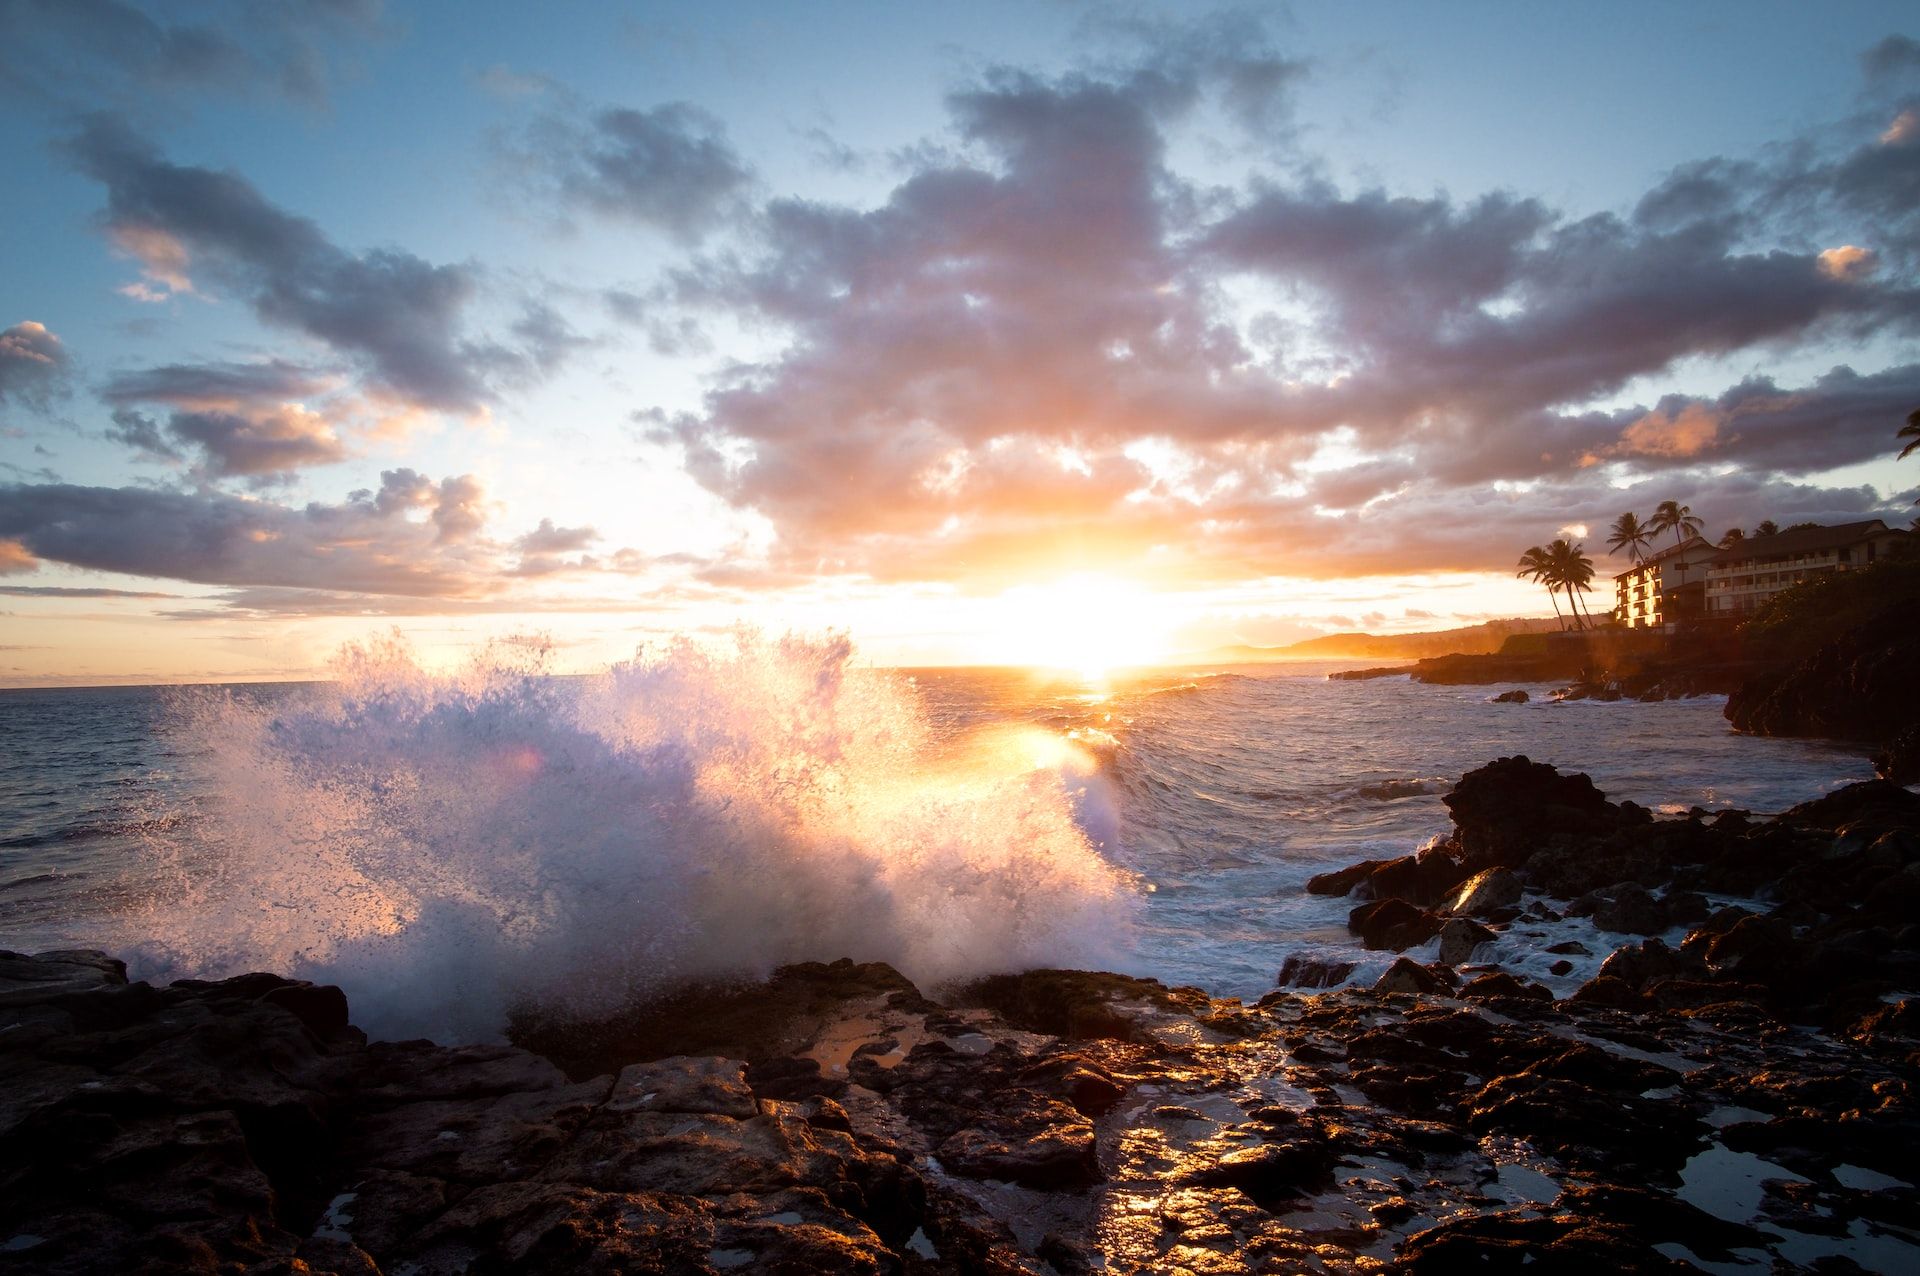 Waves crashing onto rocks in Poipu, Kauai